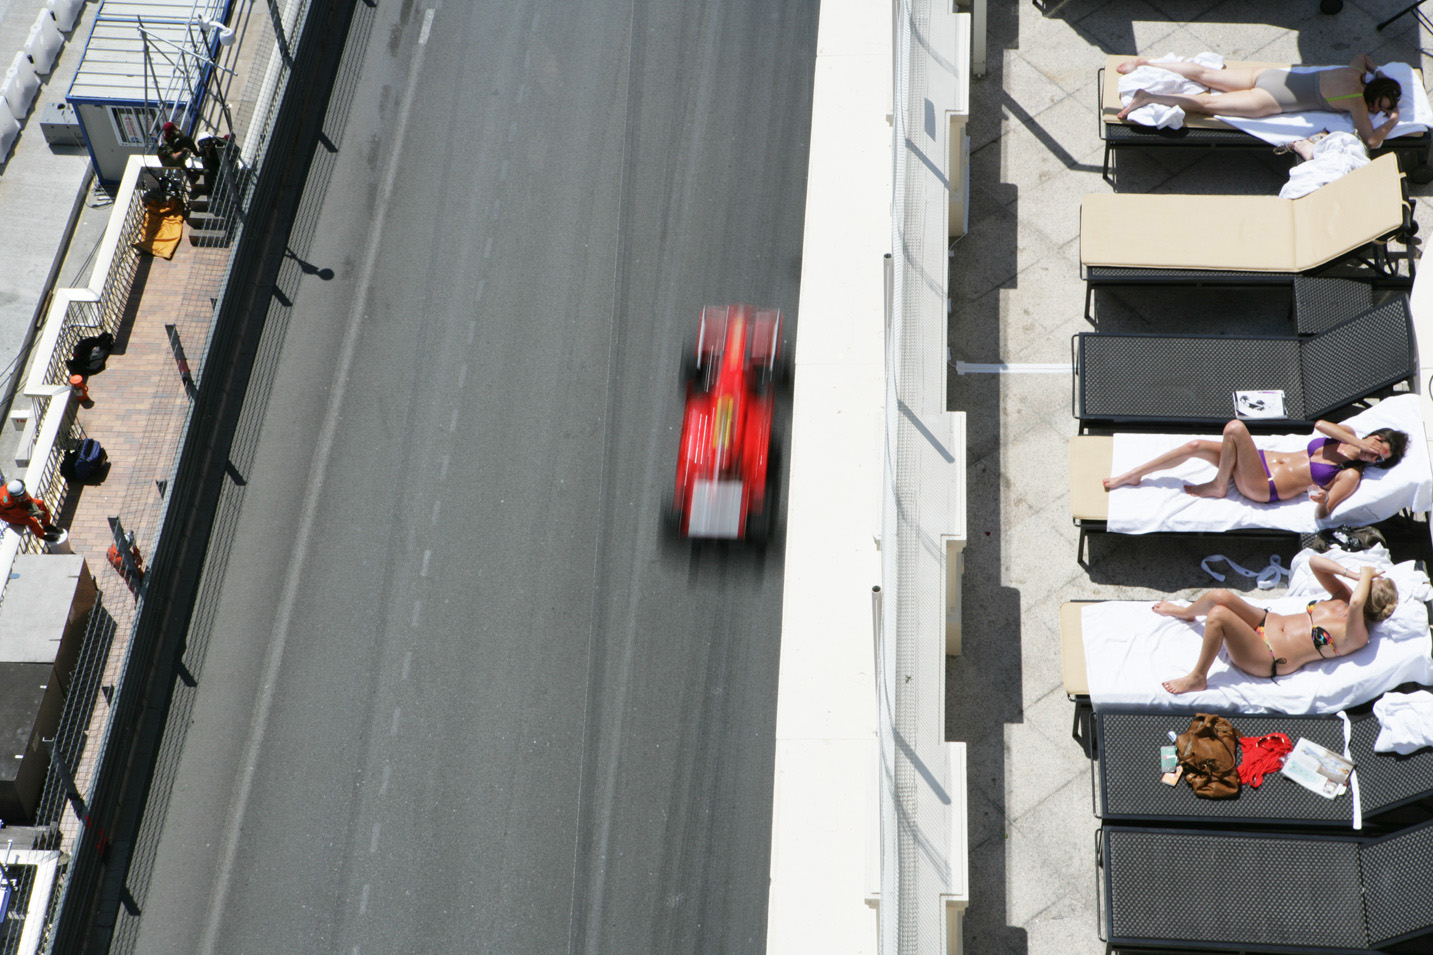 Sun worshipers at the Monaco Grand Prix